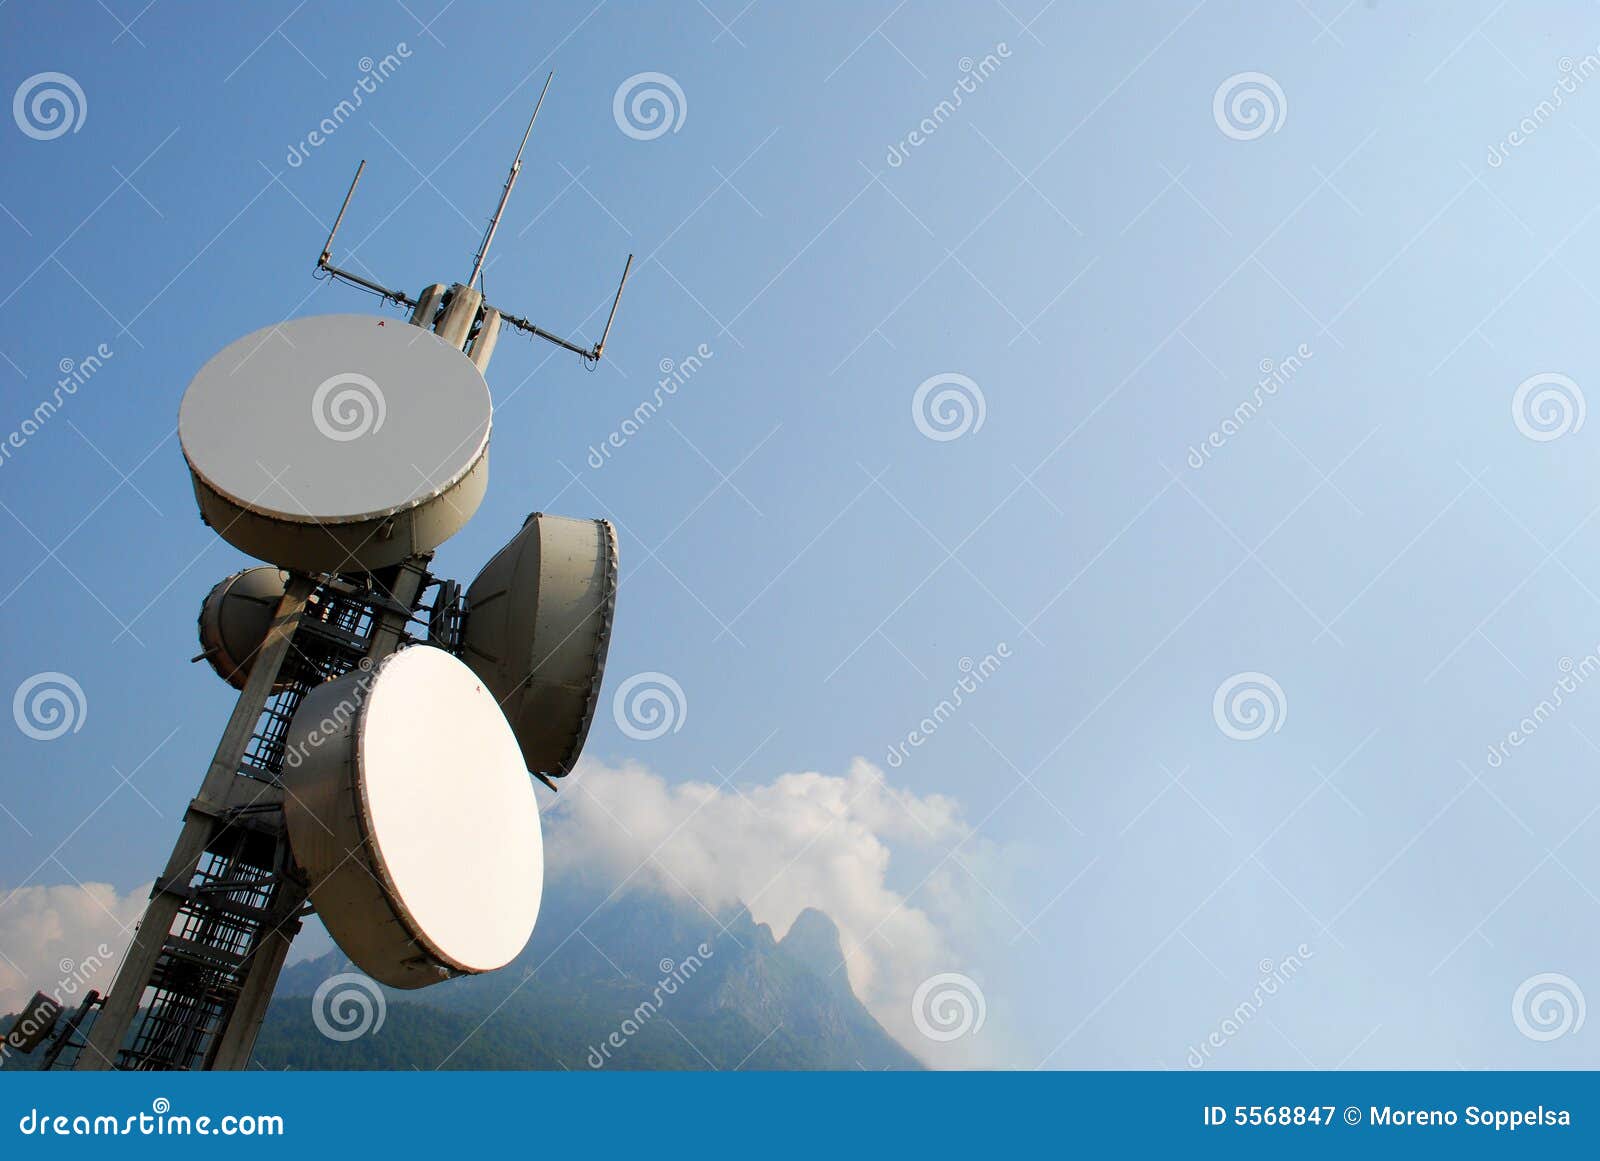 communication gsm, umts e hsdpa tower